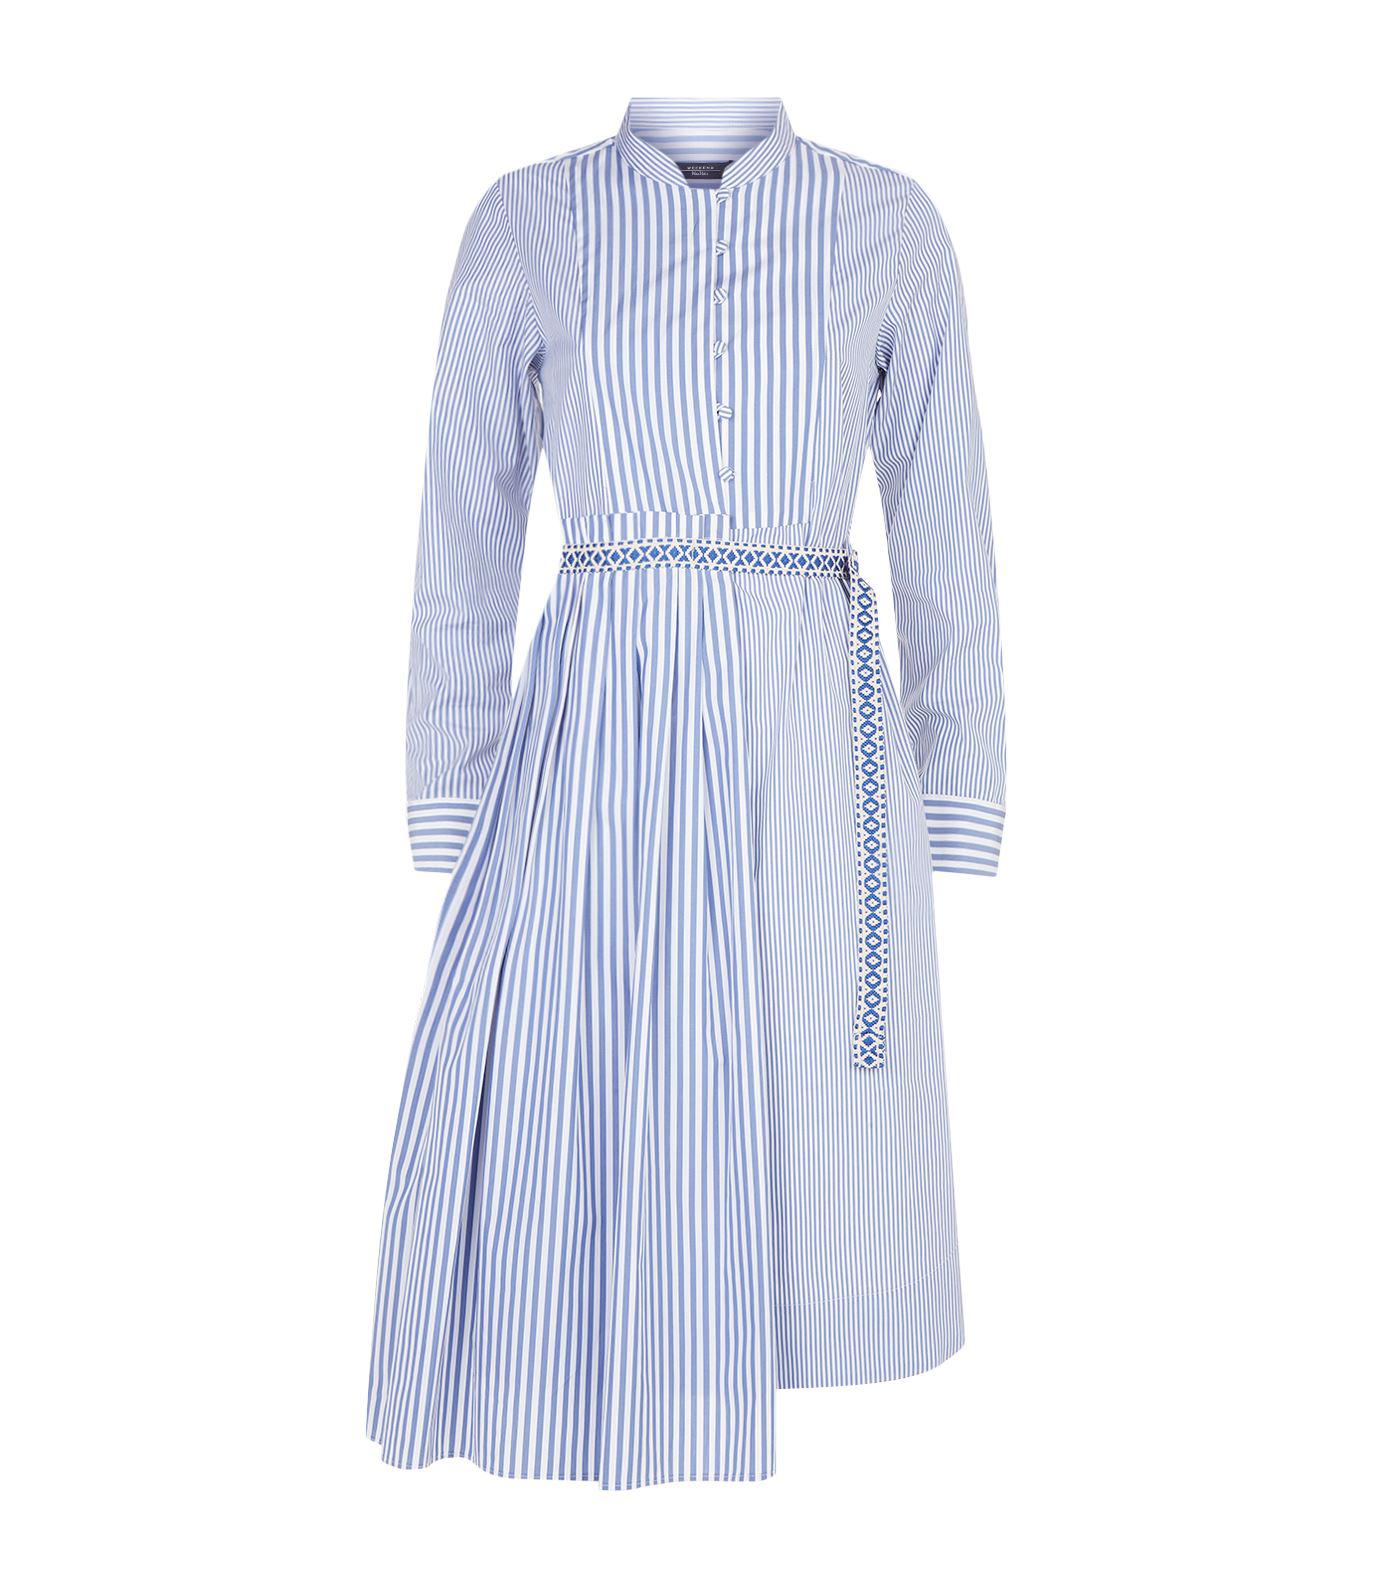 Weekend by Maxmara Cotton Striped Shirt Dress in Navy (Blue) - Lyst